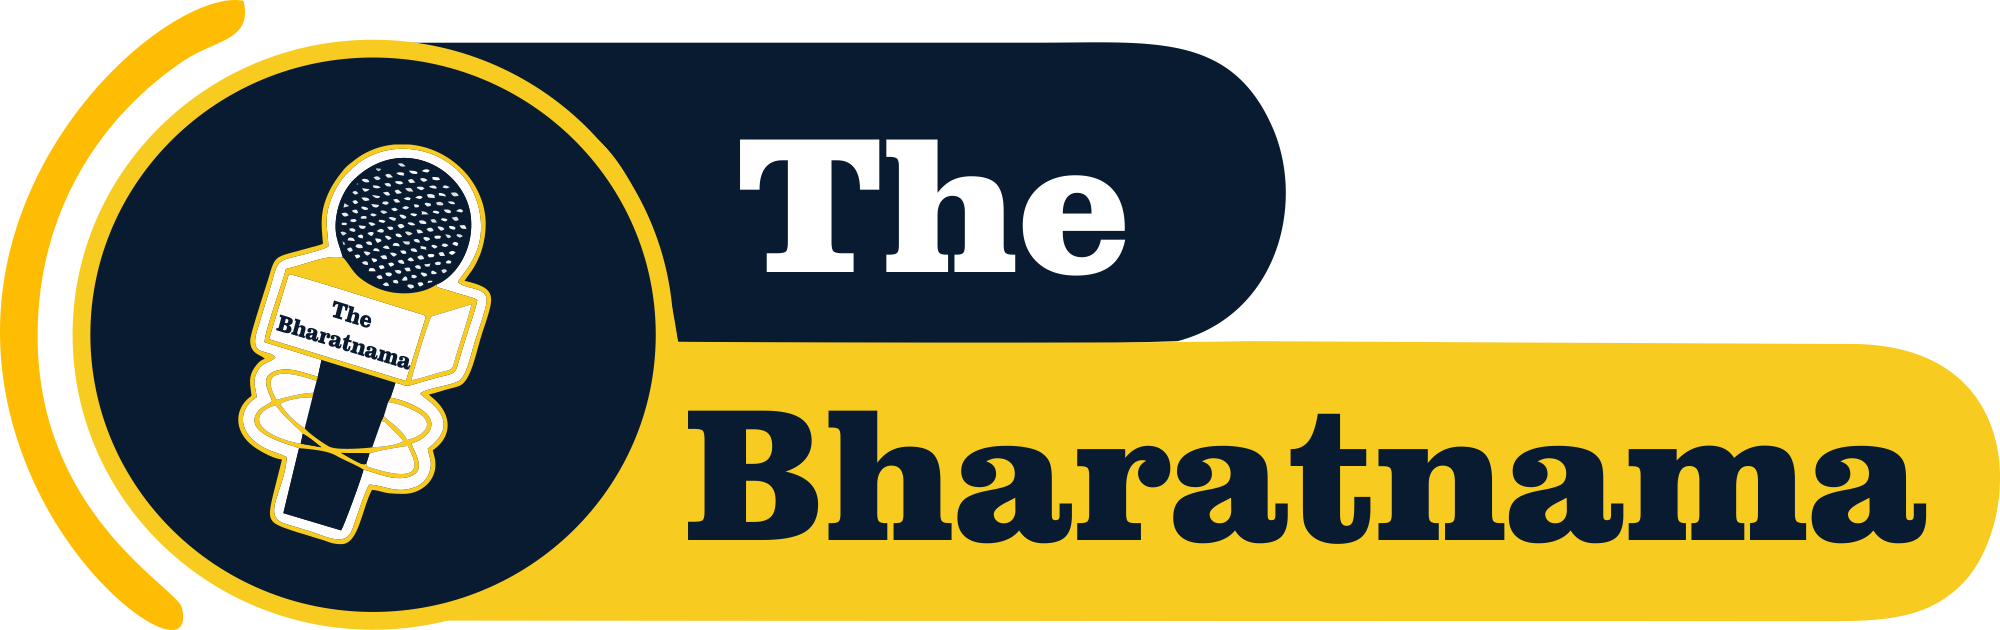 the bharatnama